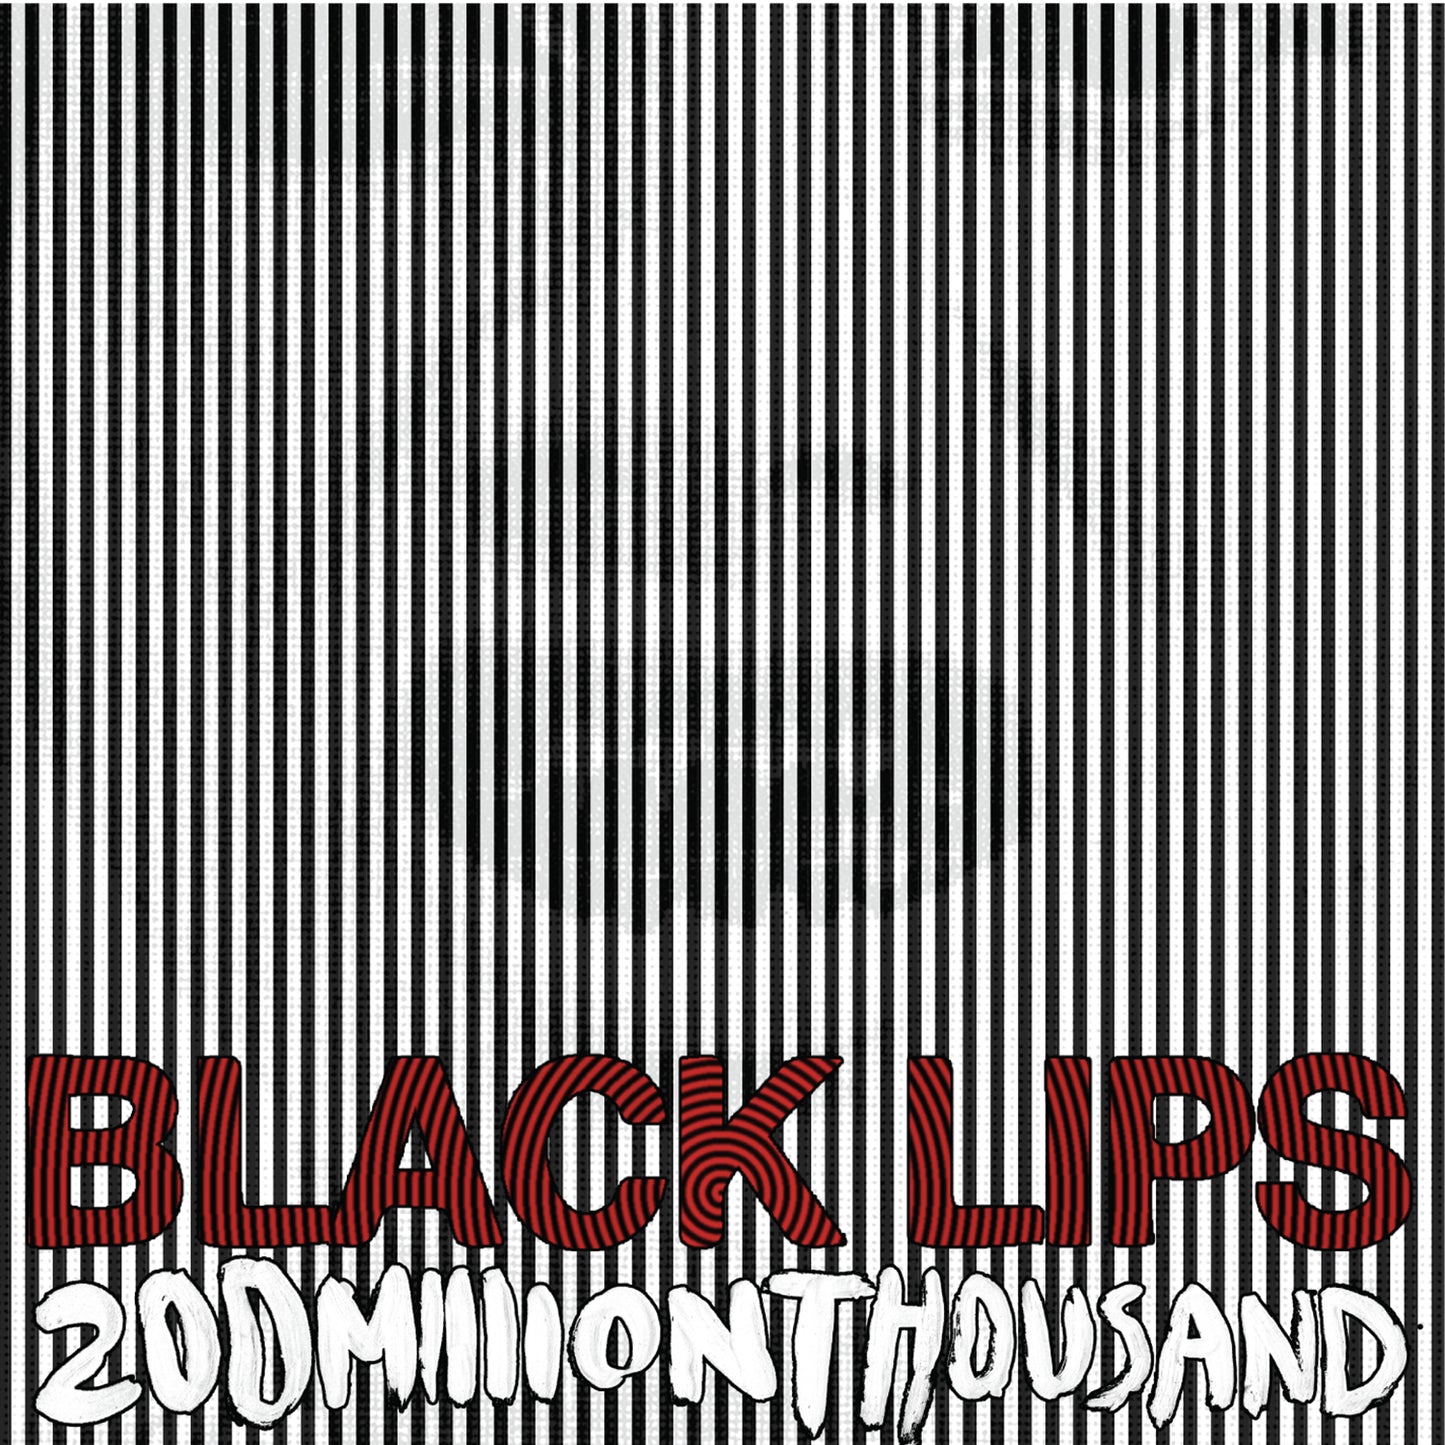 Black Lips - '200 Million Thousand'